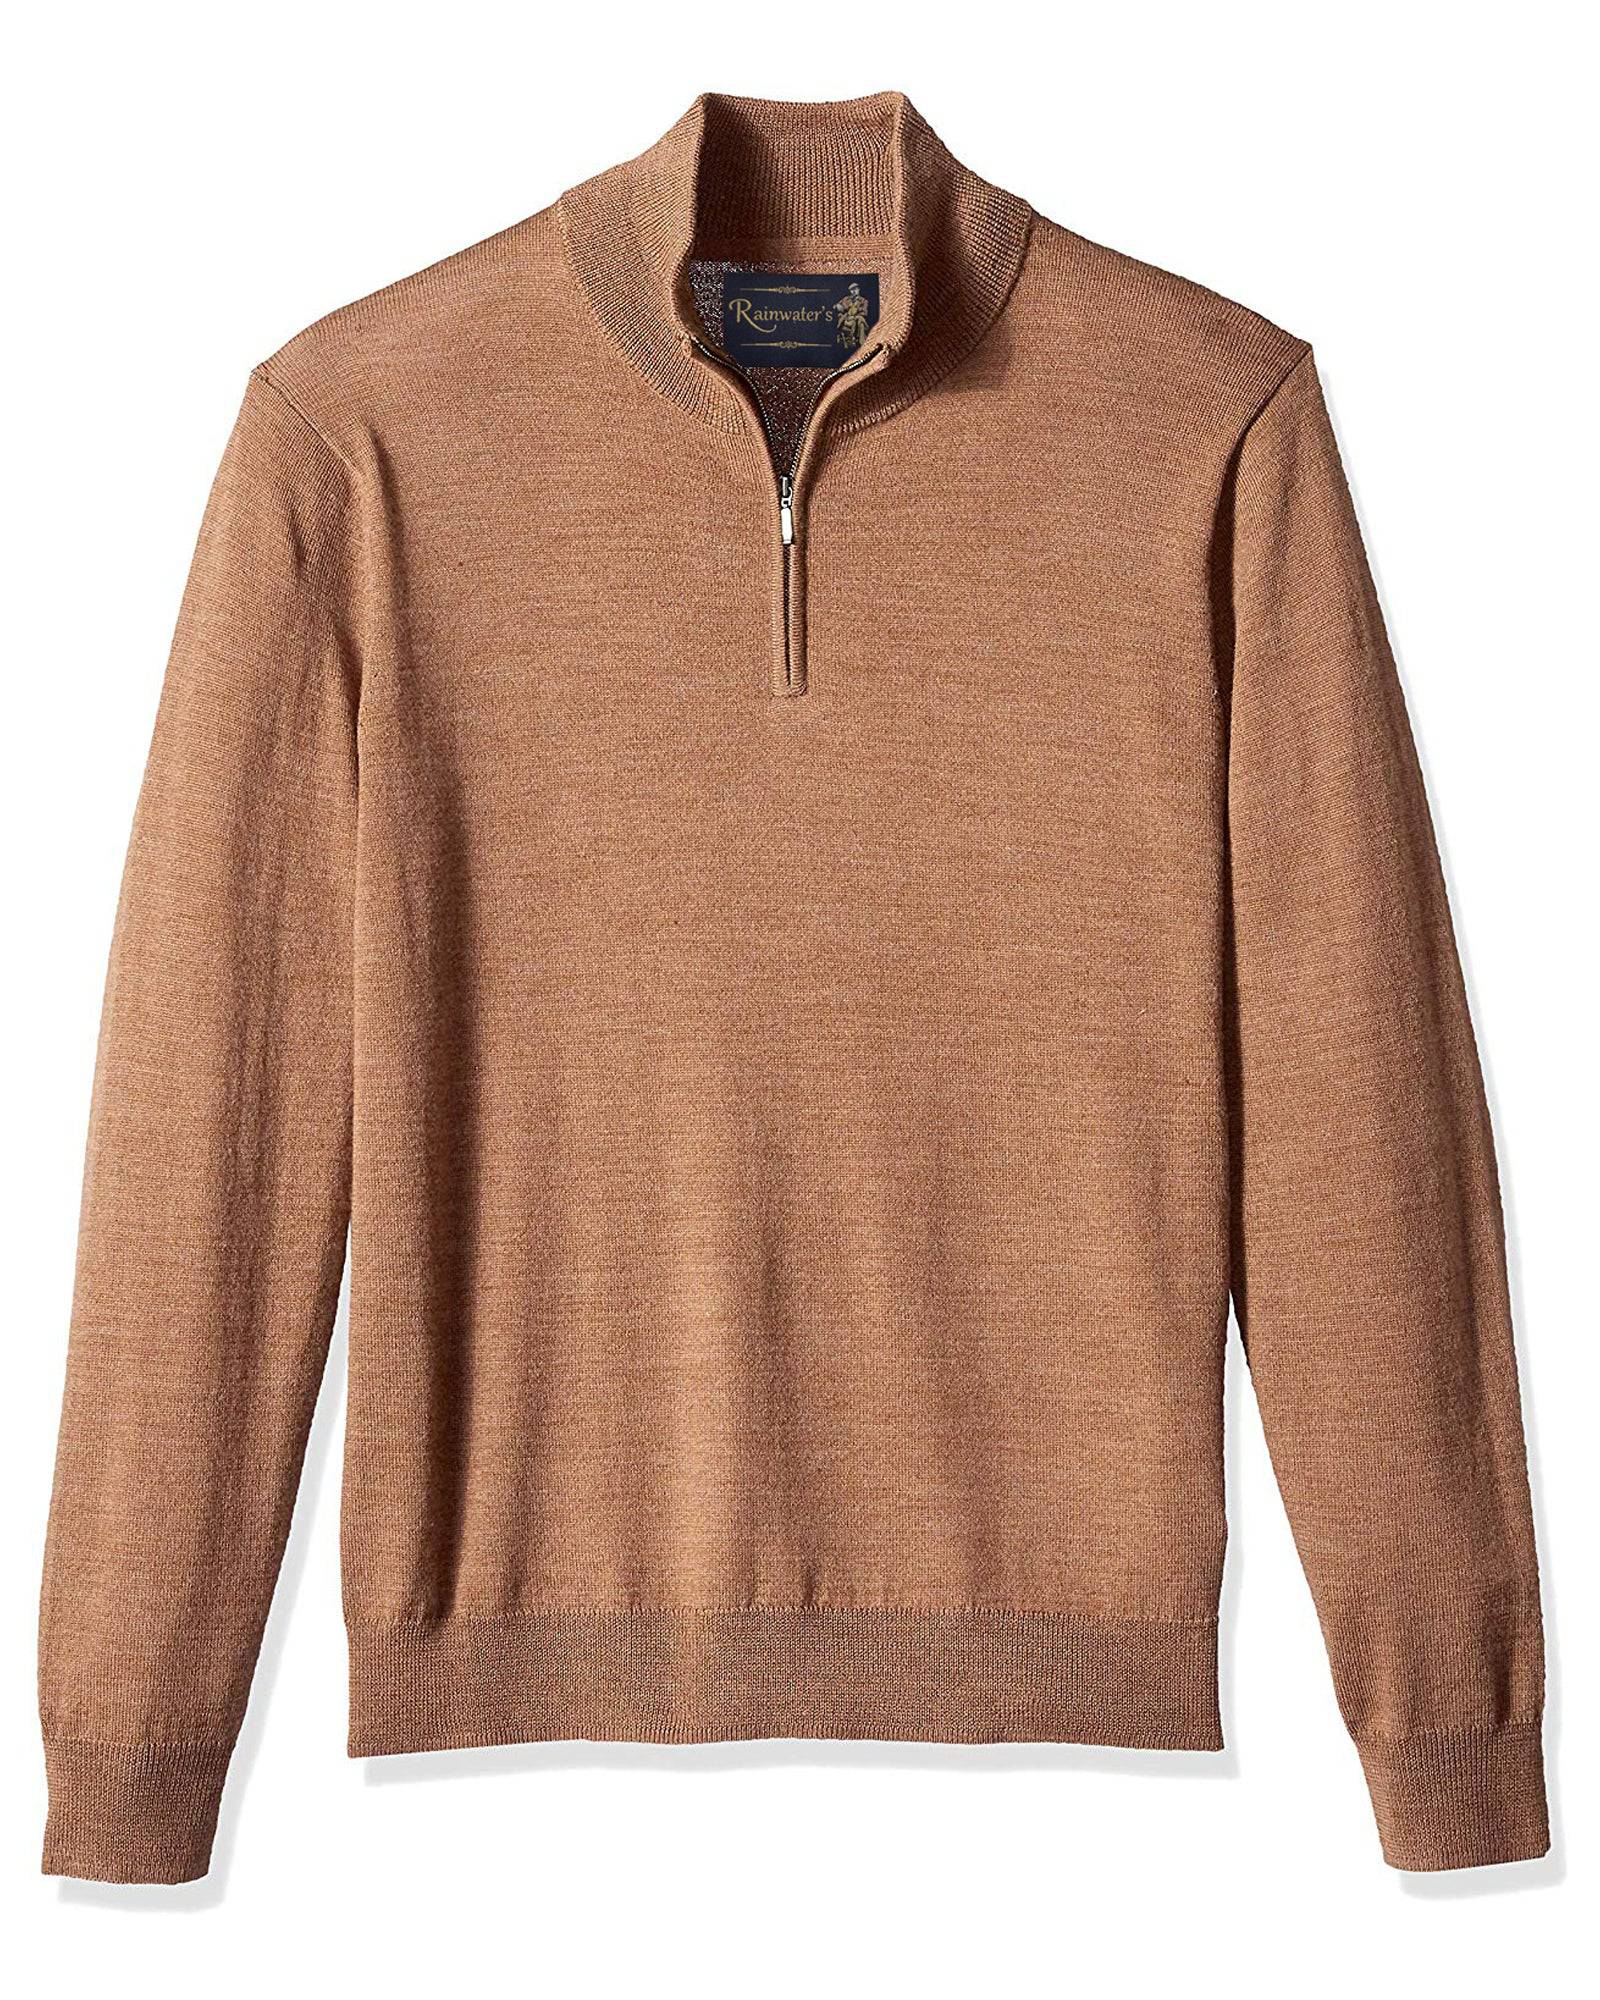 1/4 Zip Mock Sweater in Camel 100% Merino Wool - Rainwater's Men's Clothing and Tuxedo Rental